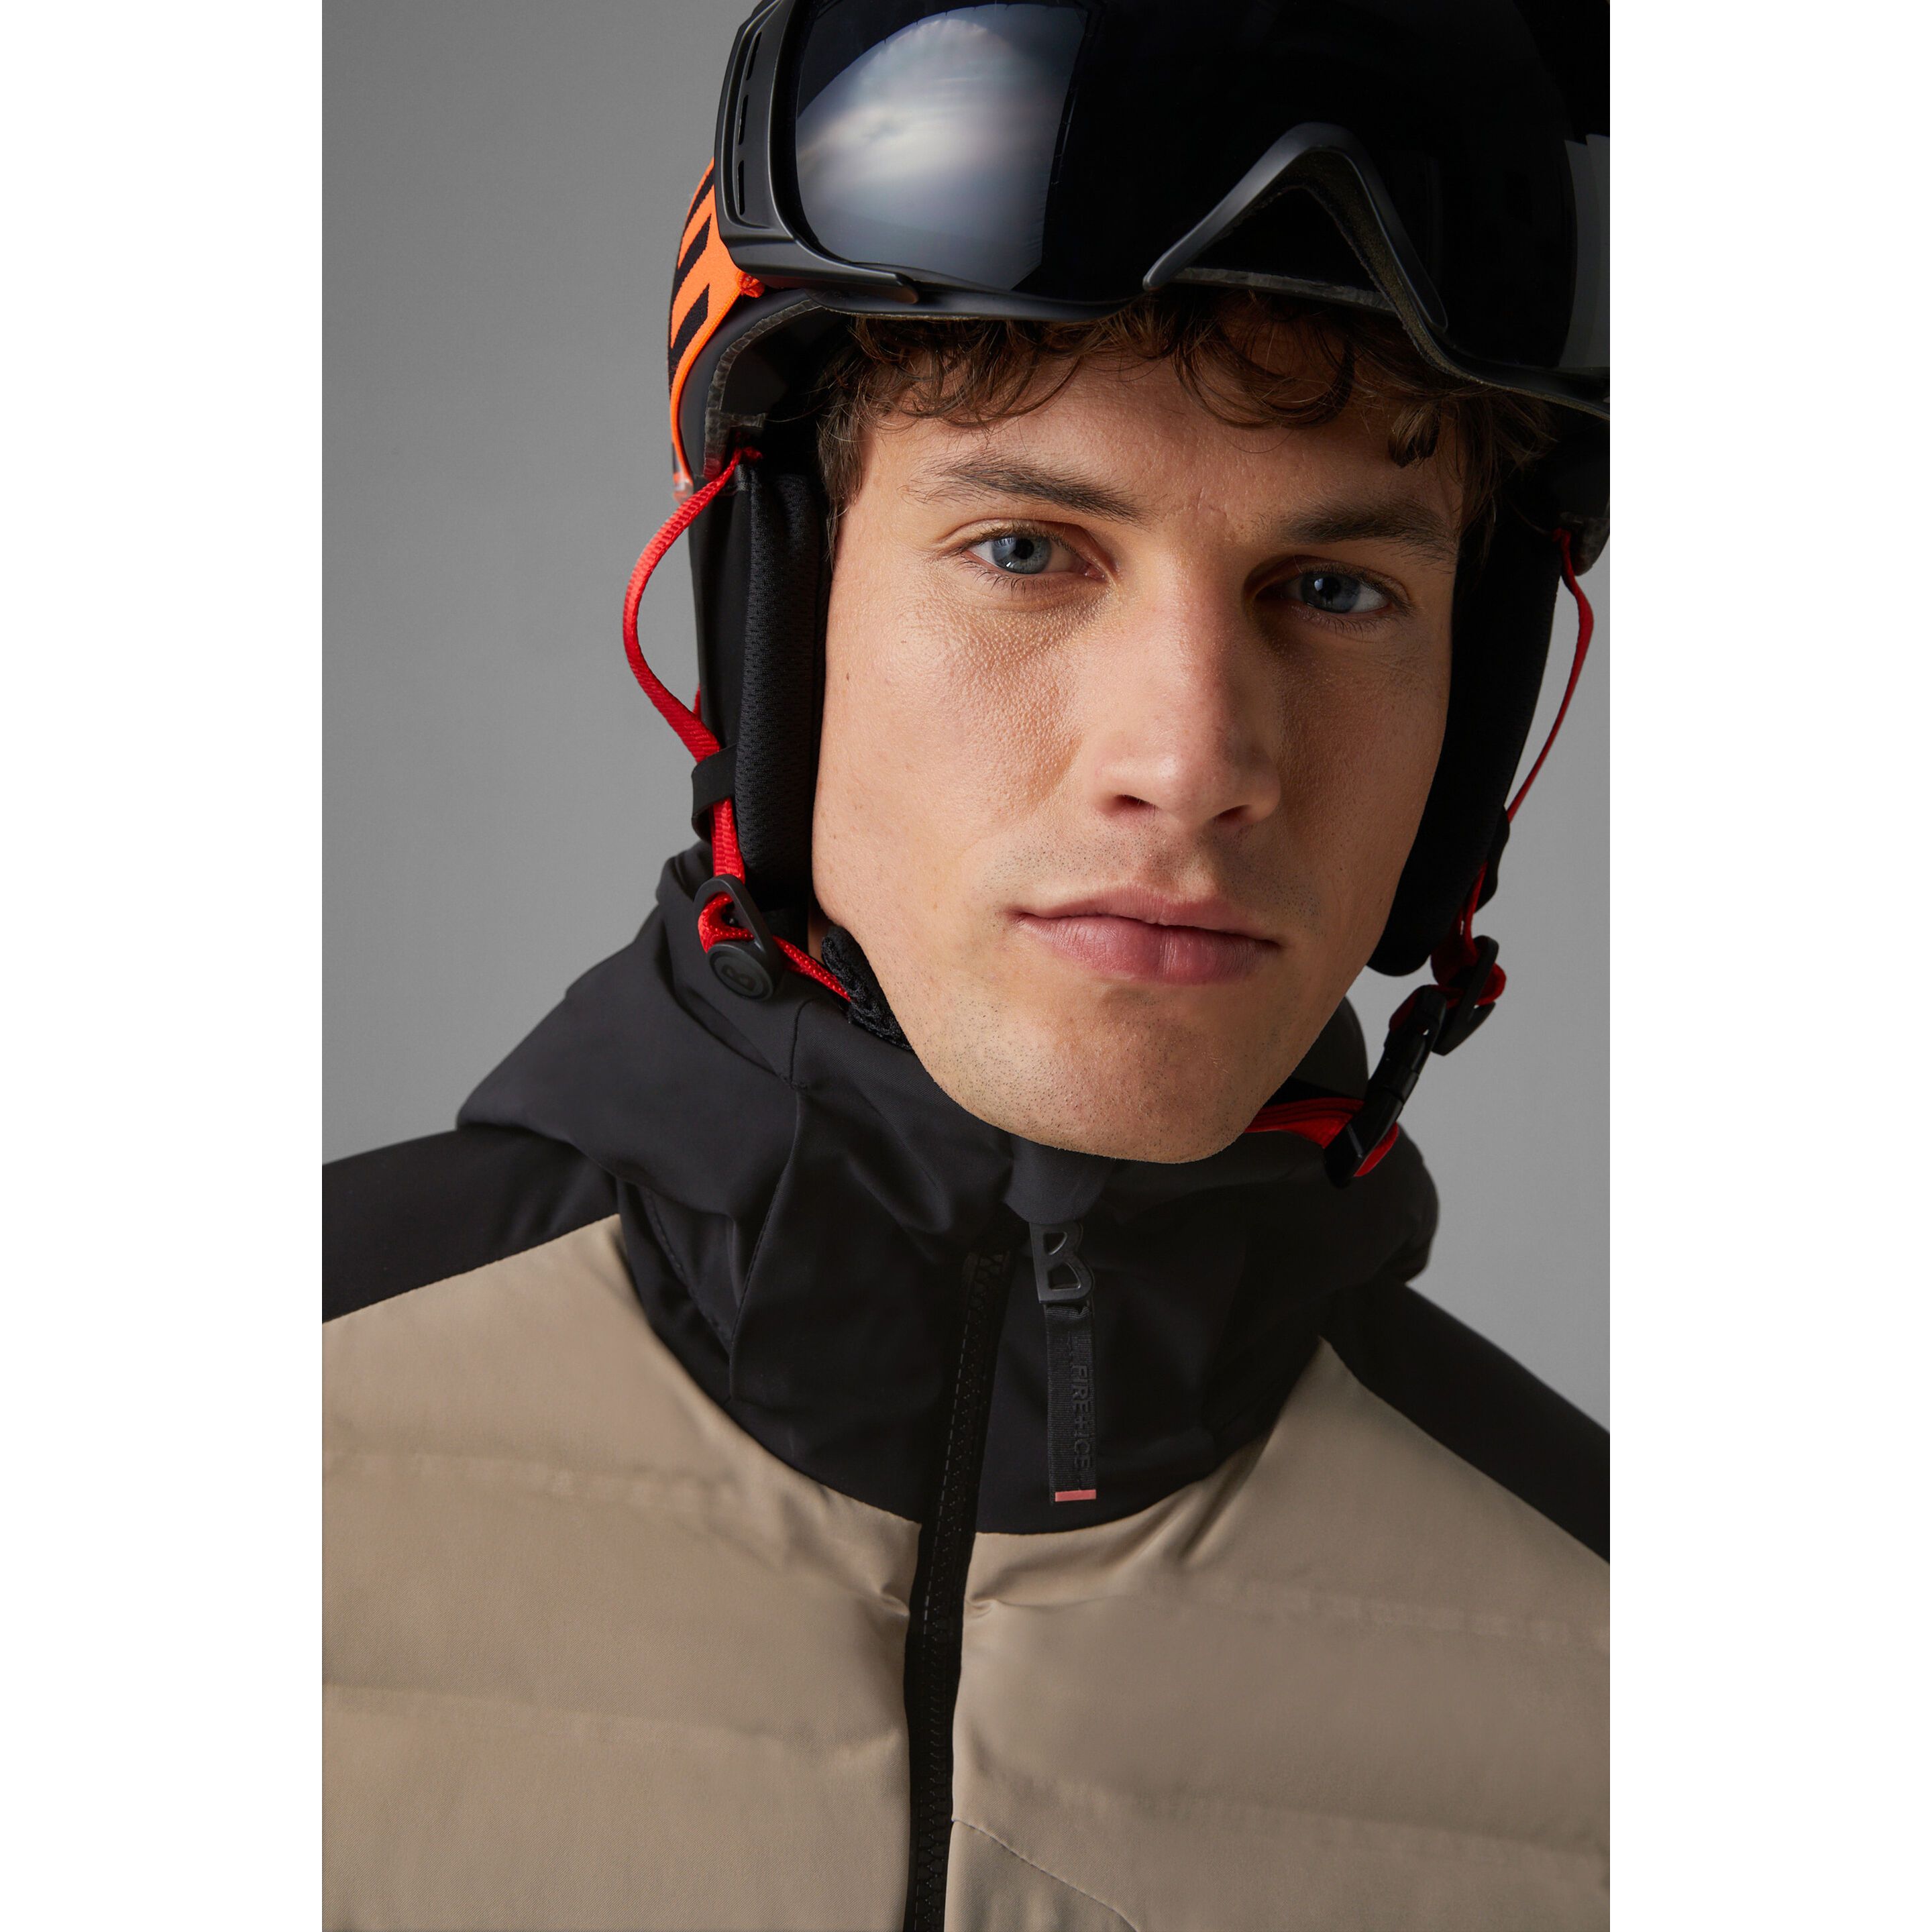  Ski & Snow Jackets -  bogner fire and ice IVO Ski Jacket